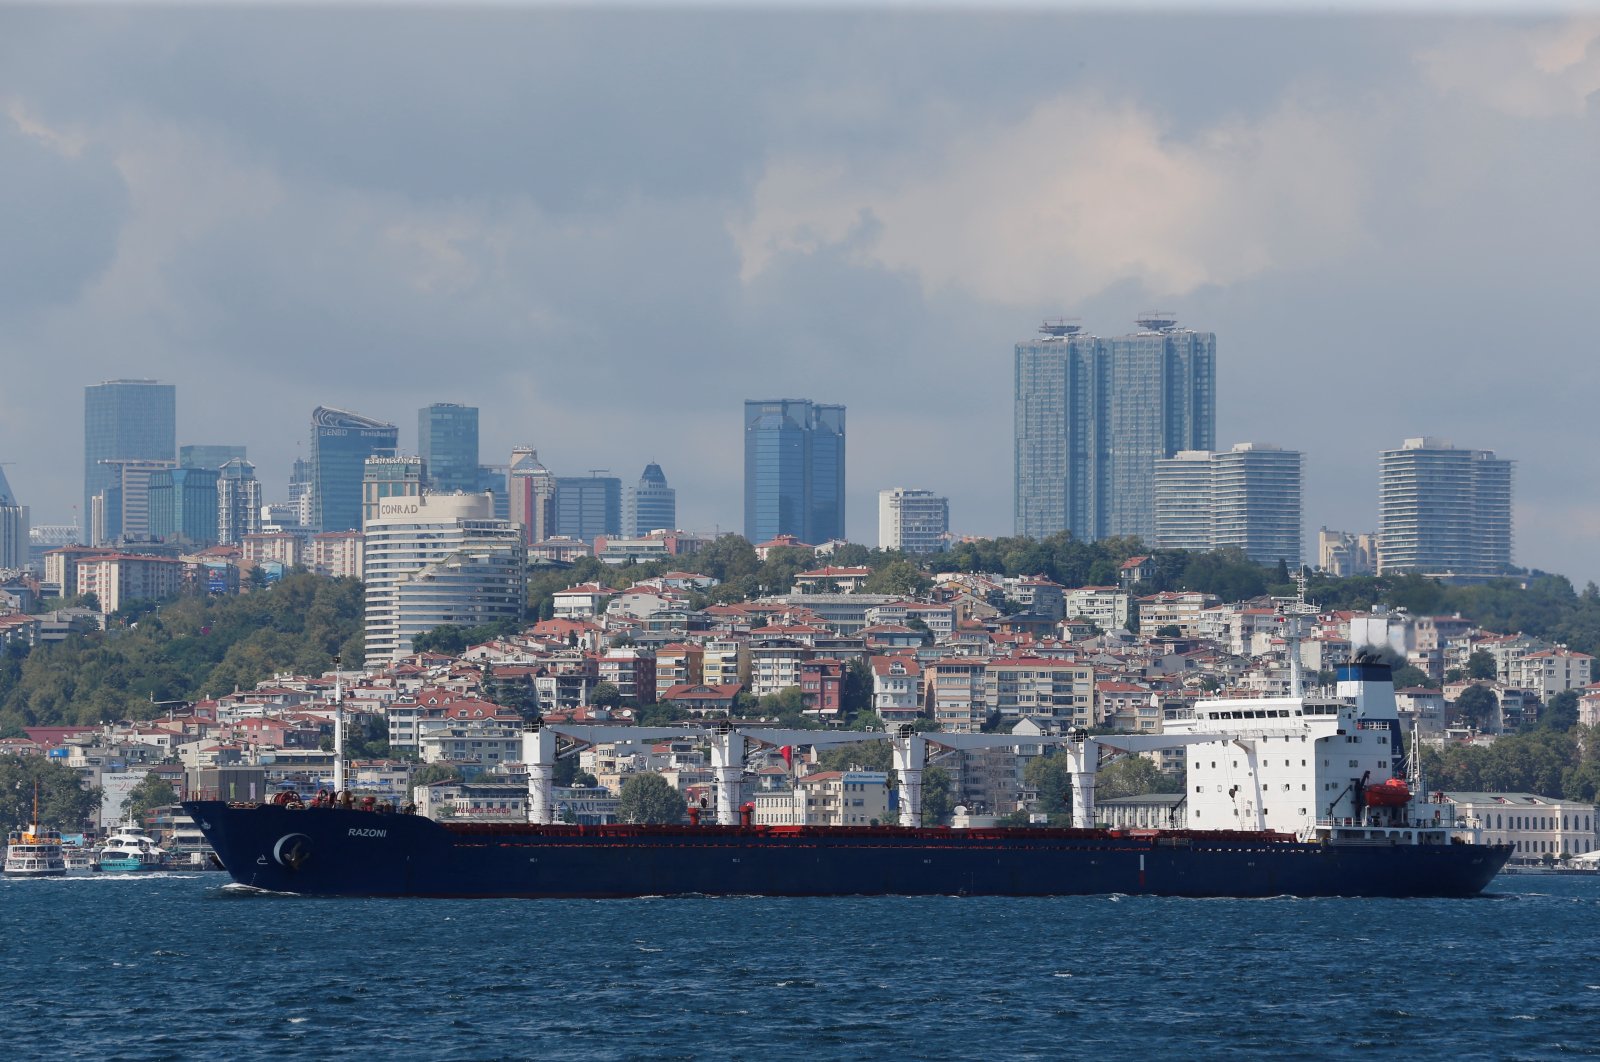 The Sierra Leone-flagged cargo ship Razoni sails in the Bosporus, in Istanbul, Türkiye, Aug. 3, 2022.